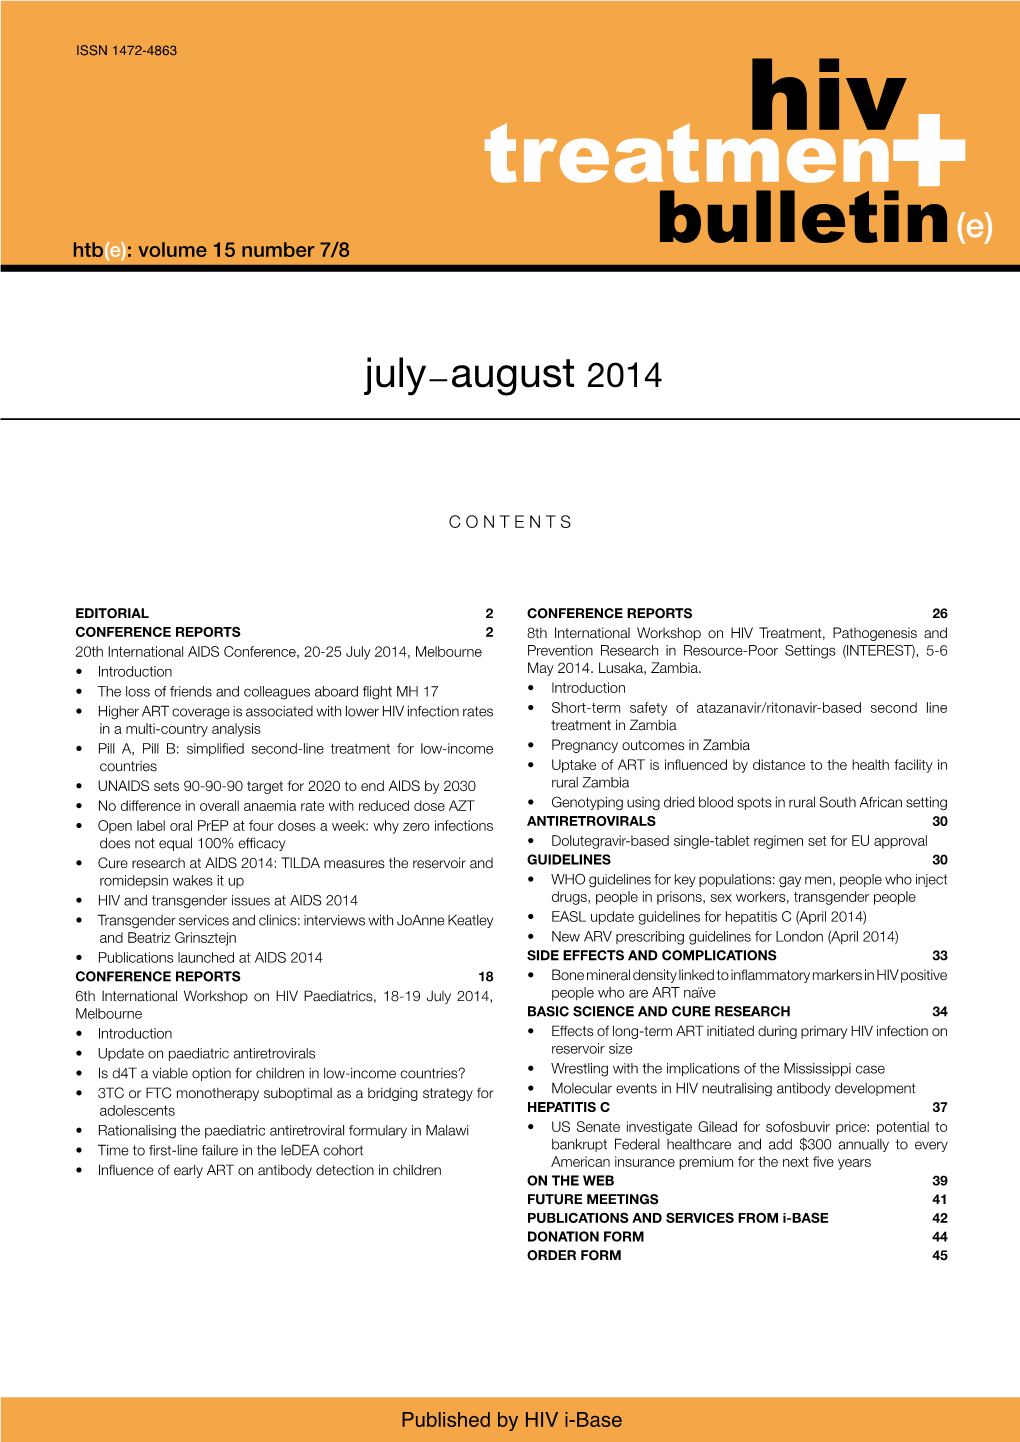 HIV Treatment Bulletin (HTB) September/October 2009